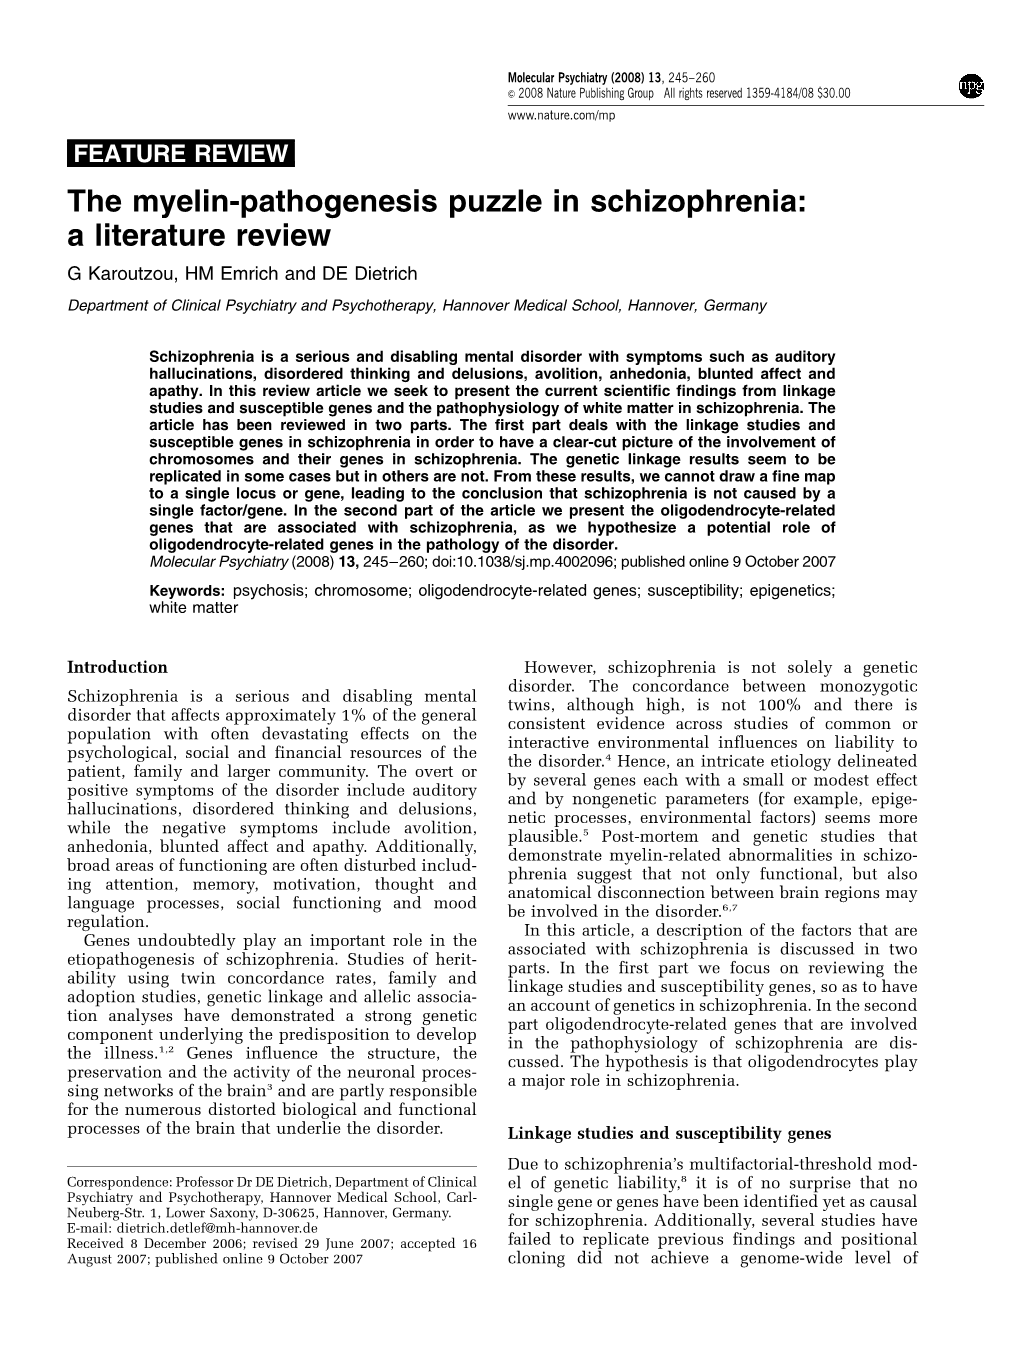 The Myelin-Pathogenesis Puzzle in Schizophrenia